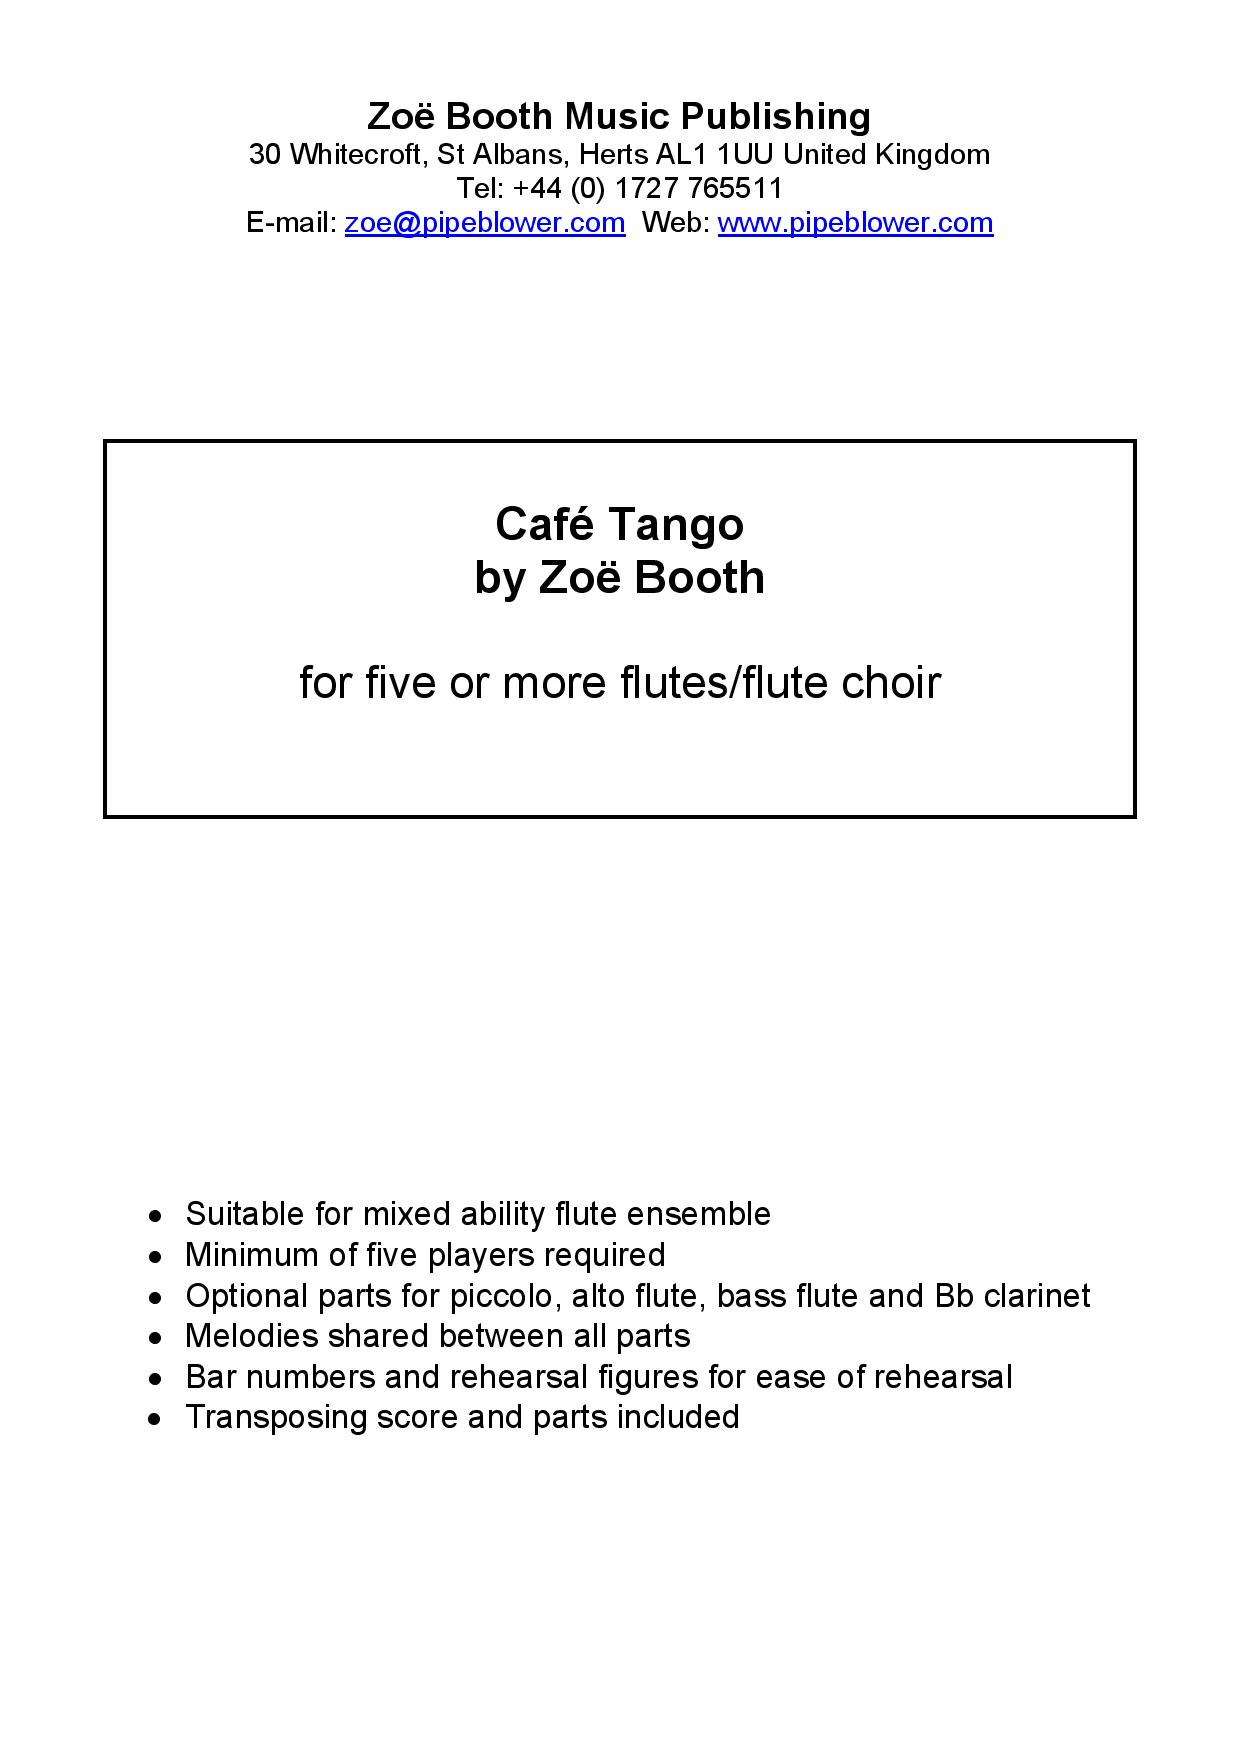 Café Tango  by Zoë Booth for five or more flutes/flute choir